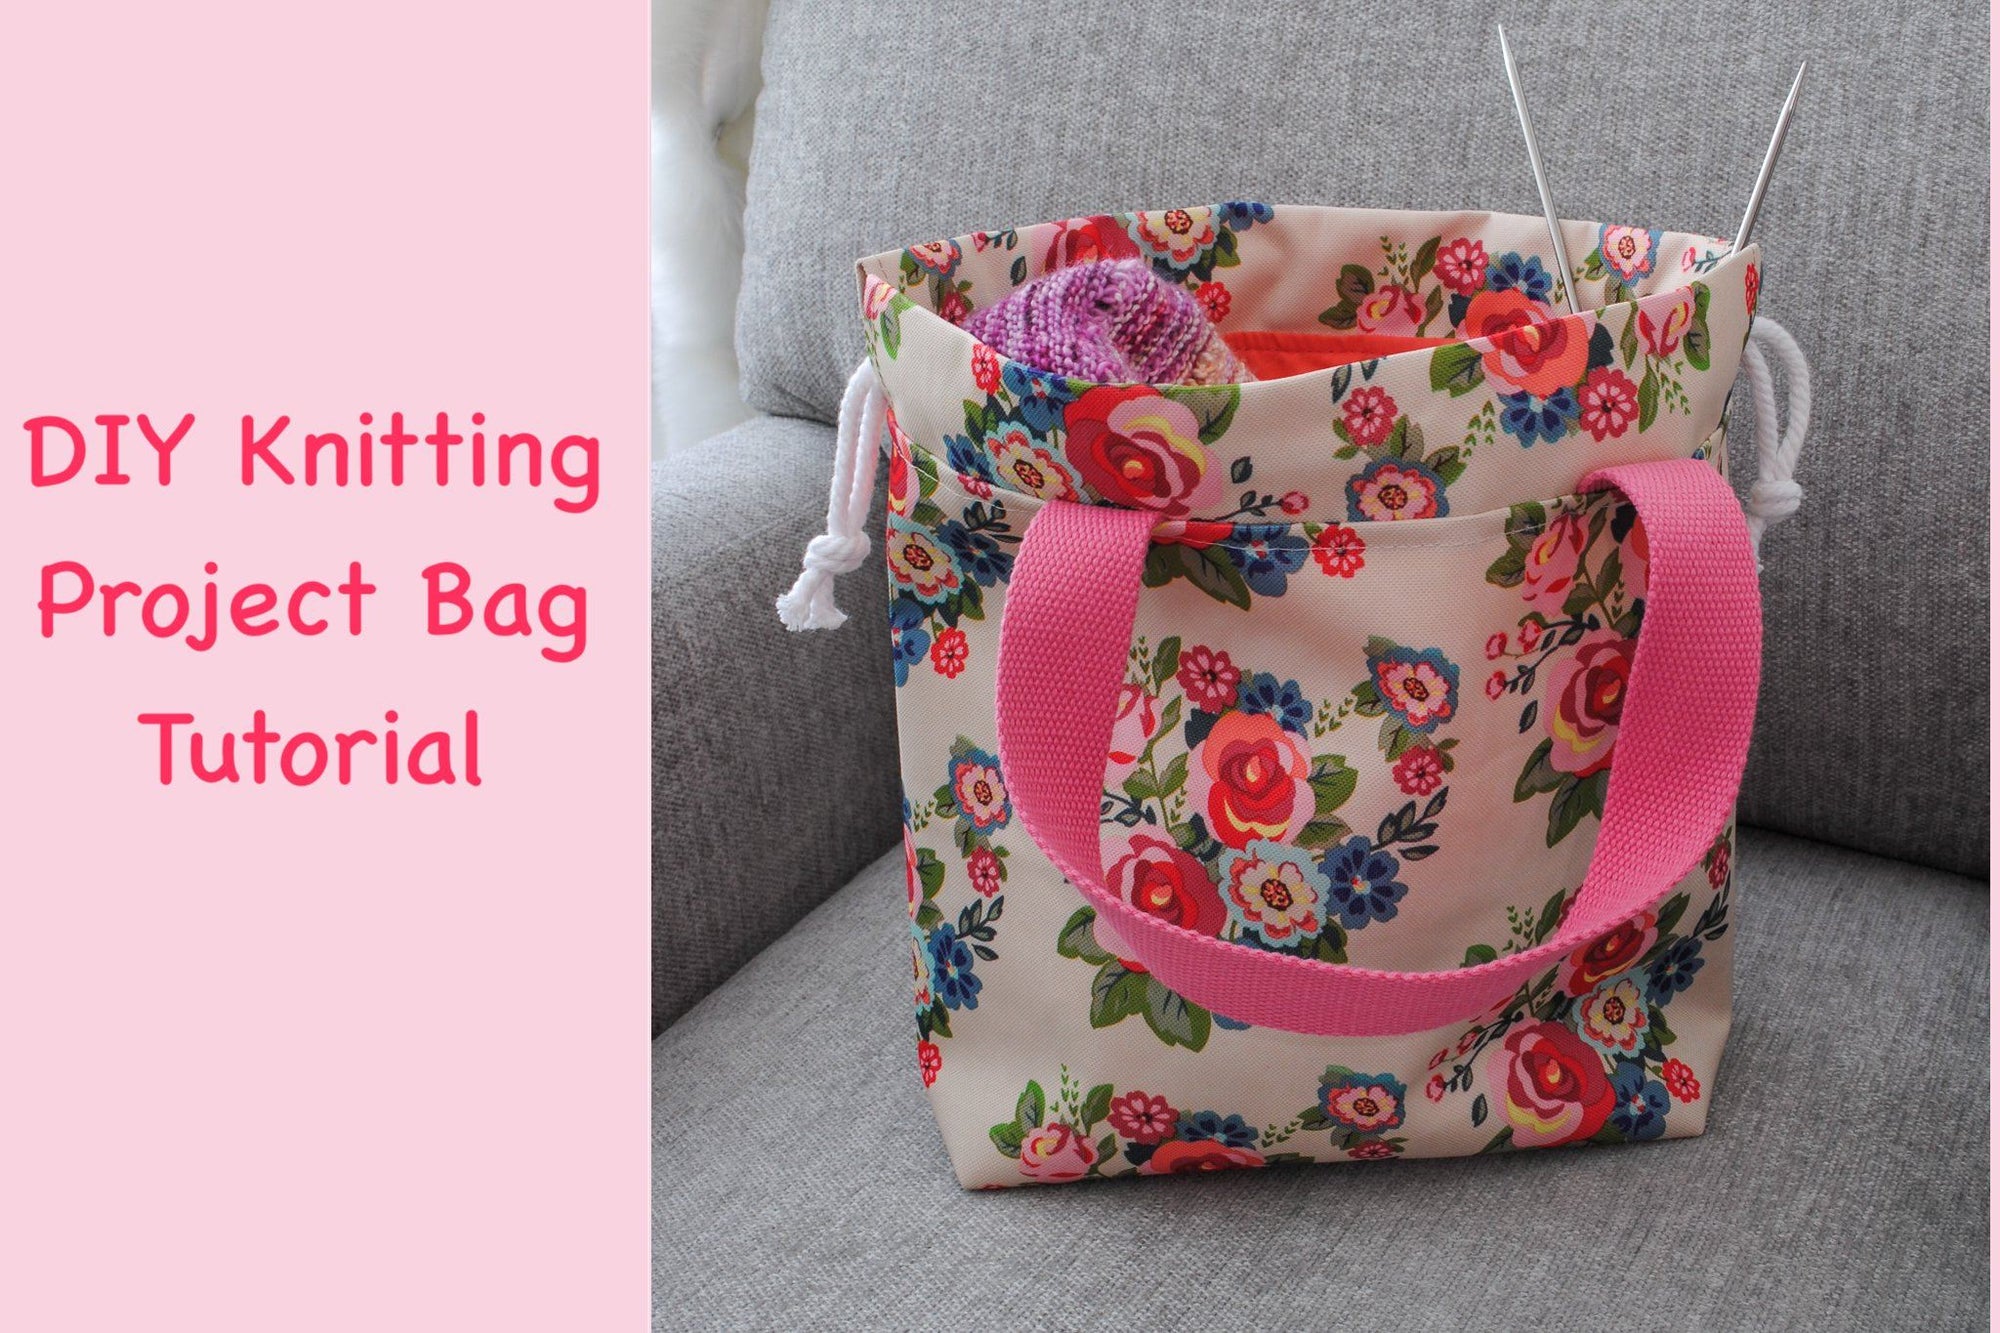 DIY "Knitting Project Bag" Tutorial